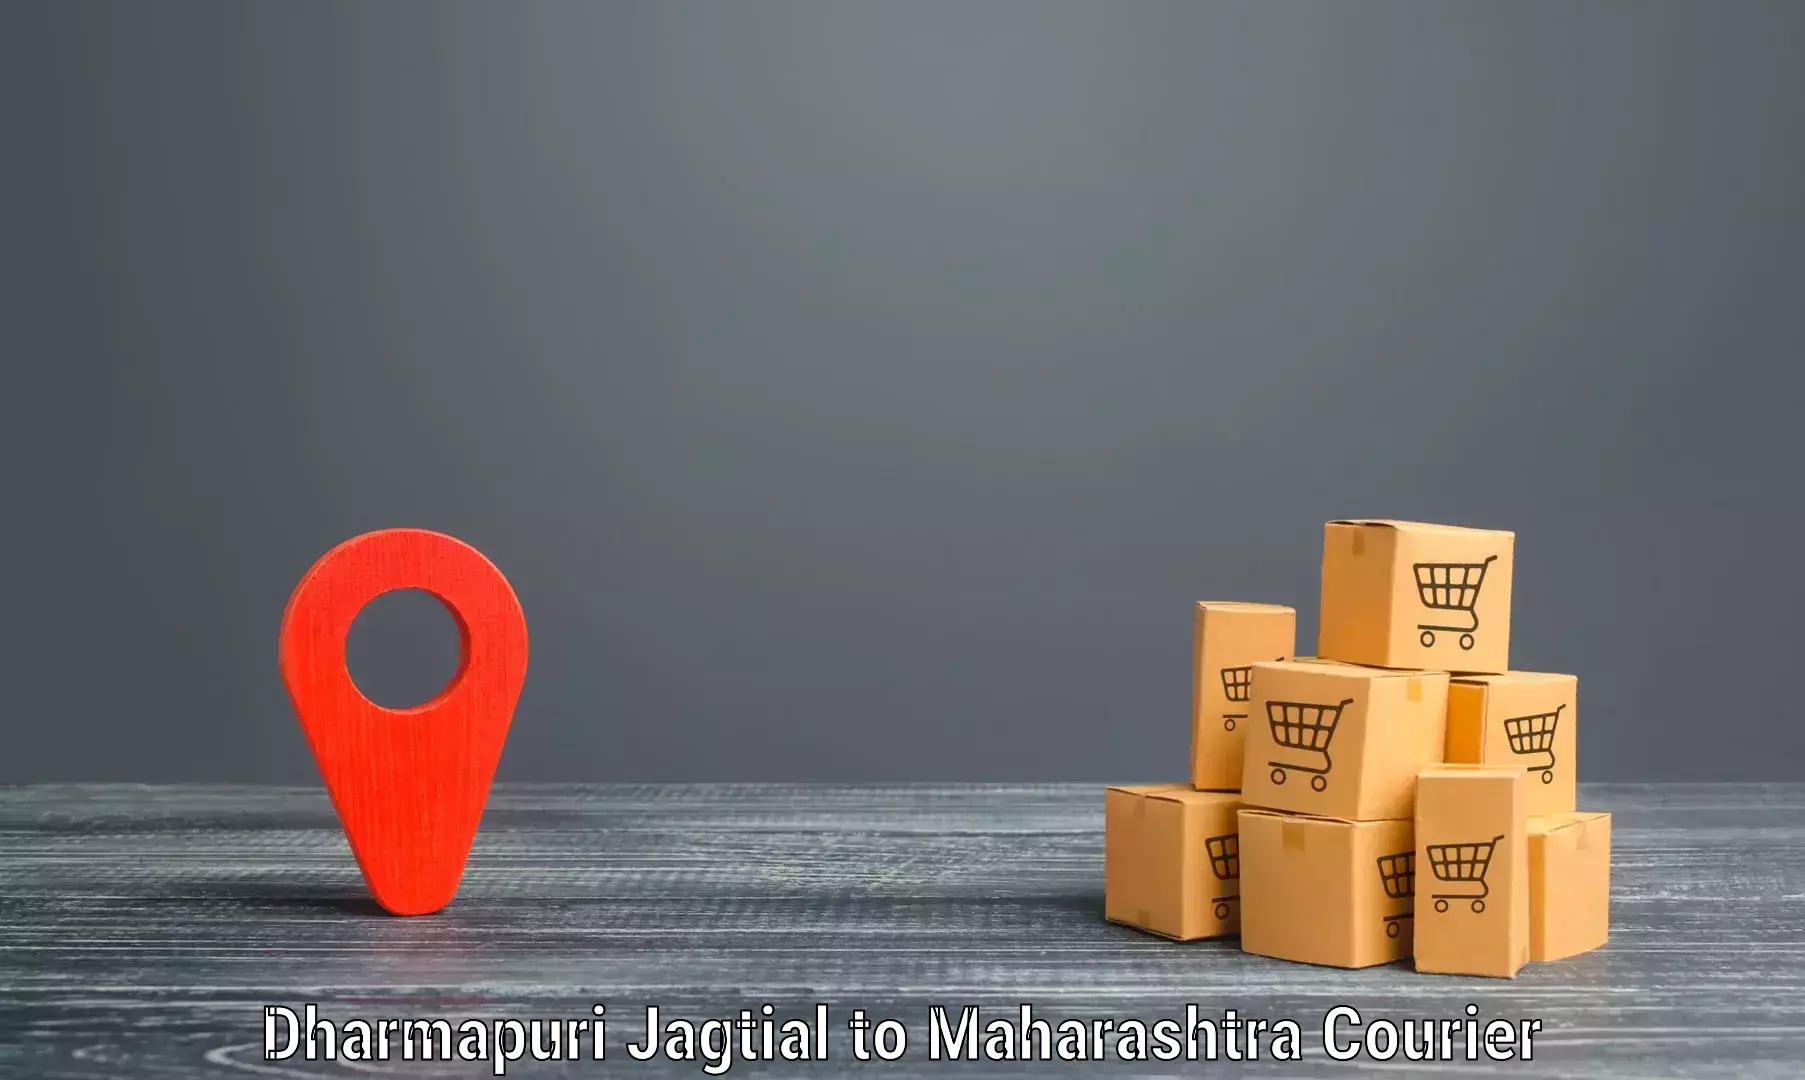 Global delivery options Dharmapuri Jagtial to Tata Institute of Social Sciences Mumbai